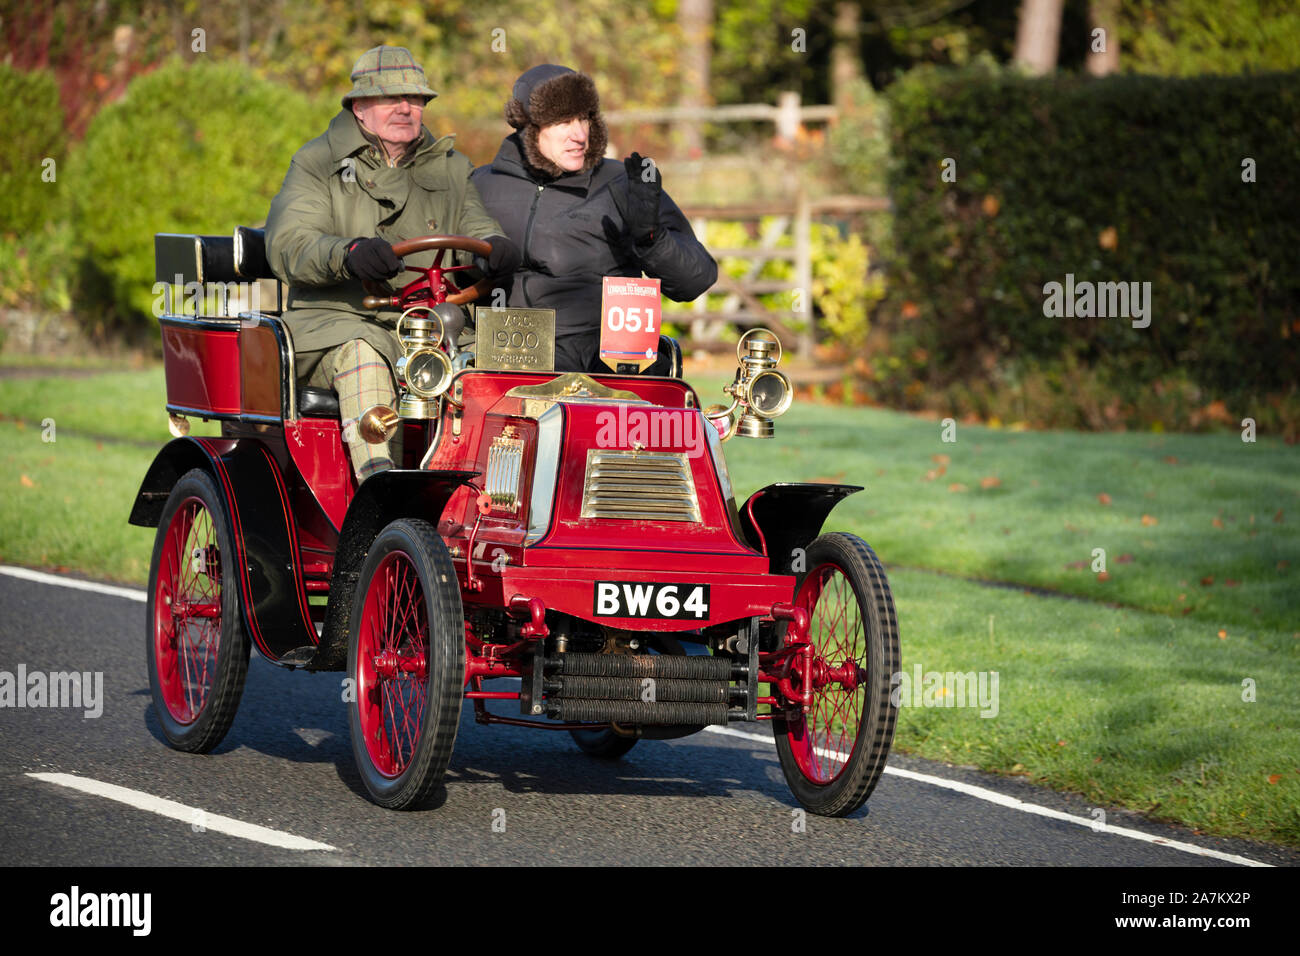 A 1900 Darracq takes part in the Bonhams London to Brighton Veteran Car Run 2019 Stock Photo